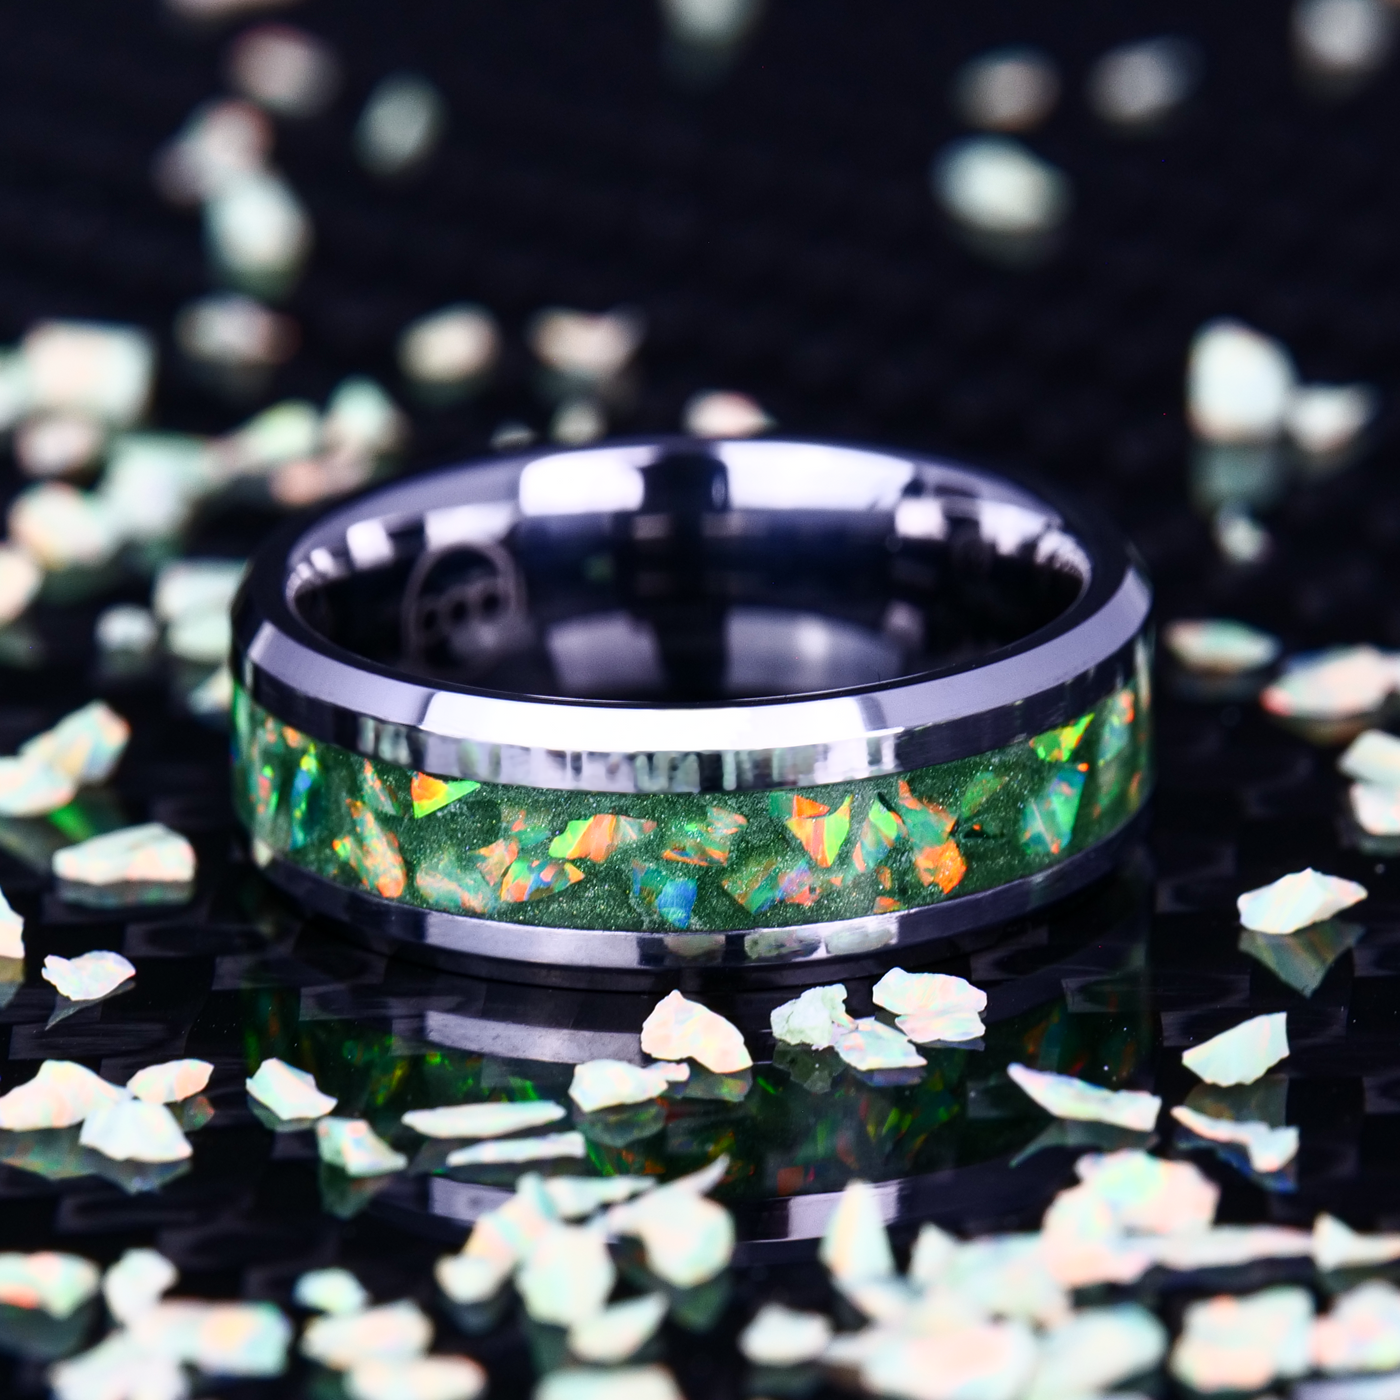 Citrus Green Opal Glowstone Ring on Tungsten - Patrick Adair Designs